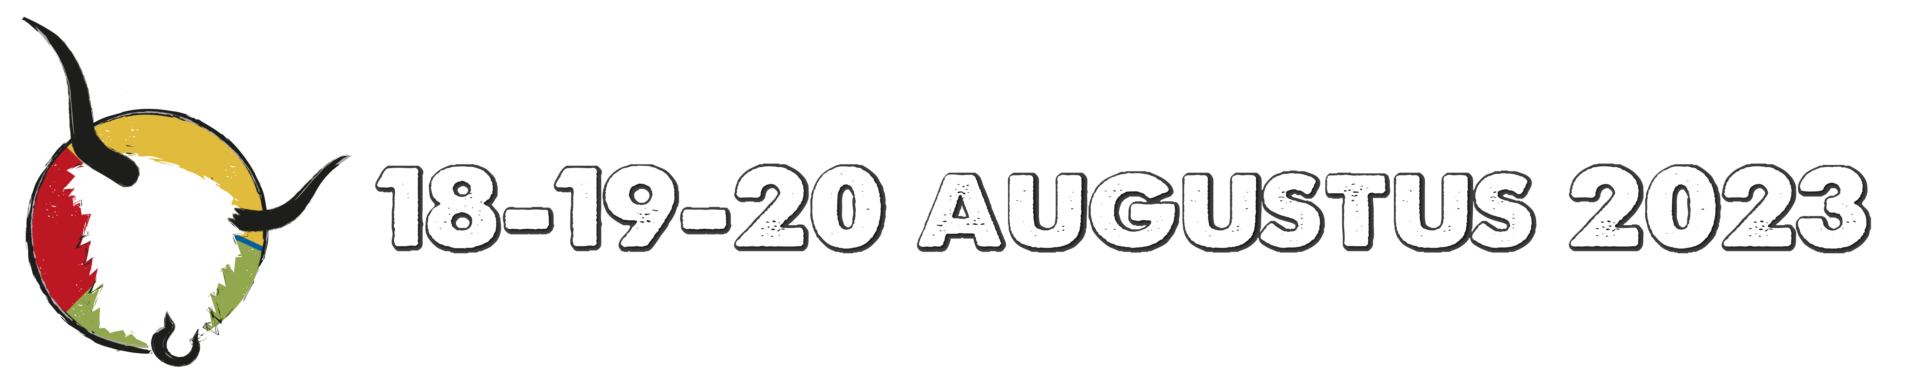 Buurser Volks Feest | 18-19-20 augustus 2023